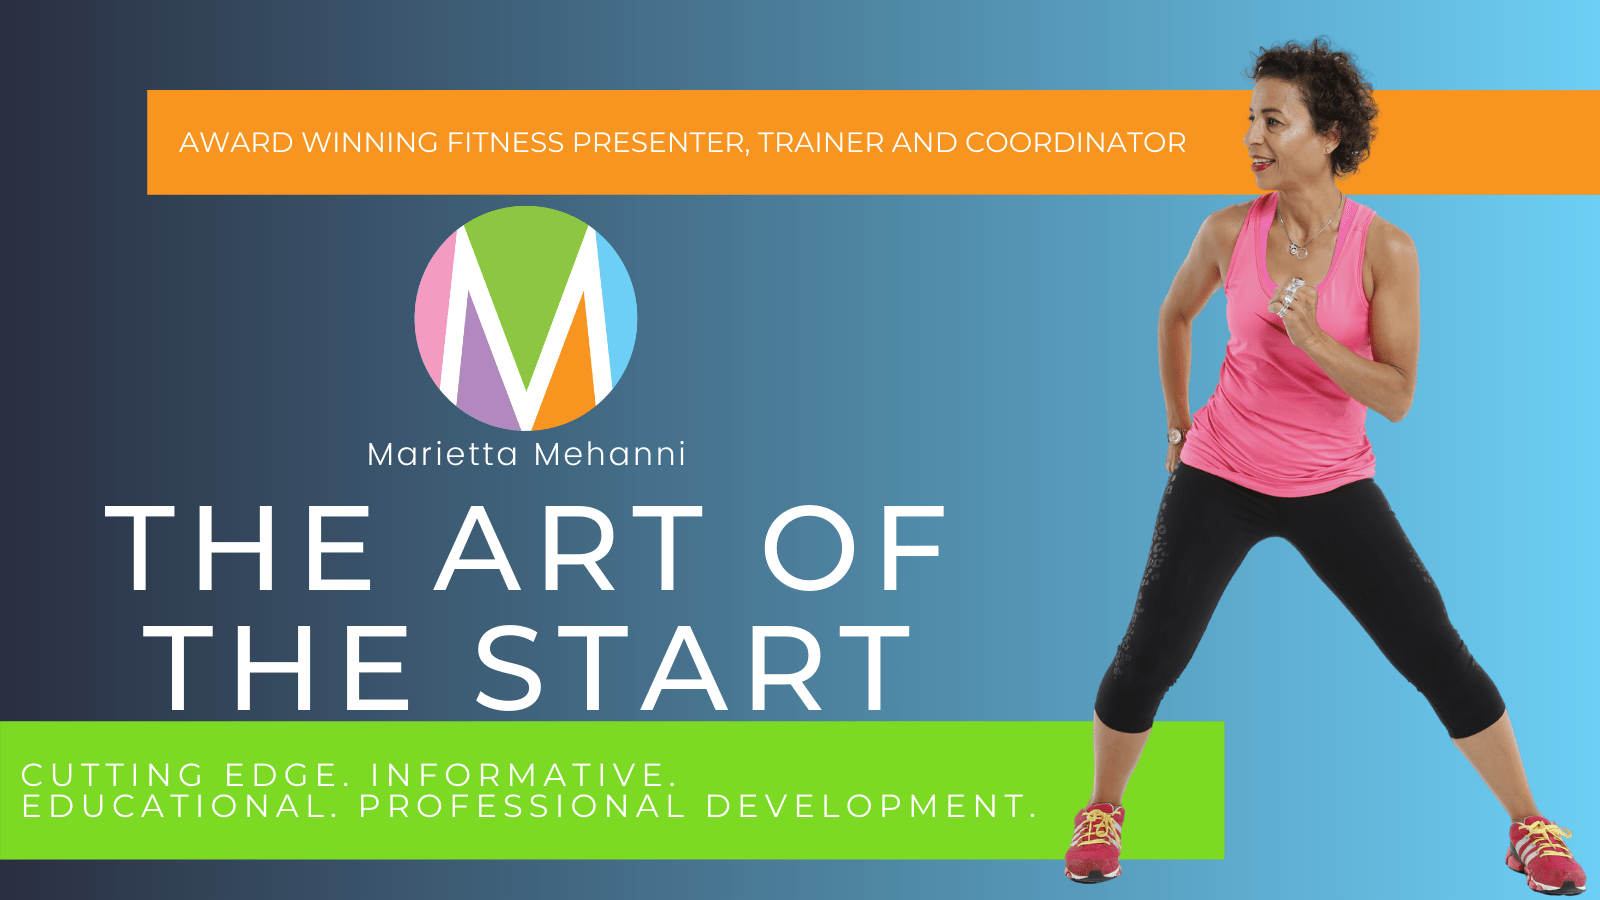 Marietta Mehanni the art of the start marietta mehanni education professional development group fitness personal training informative fitness guru presenter